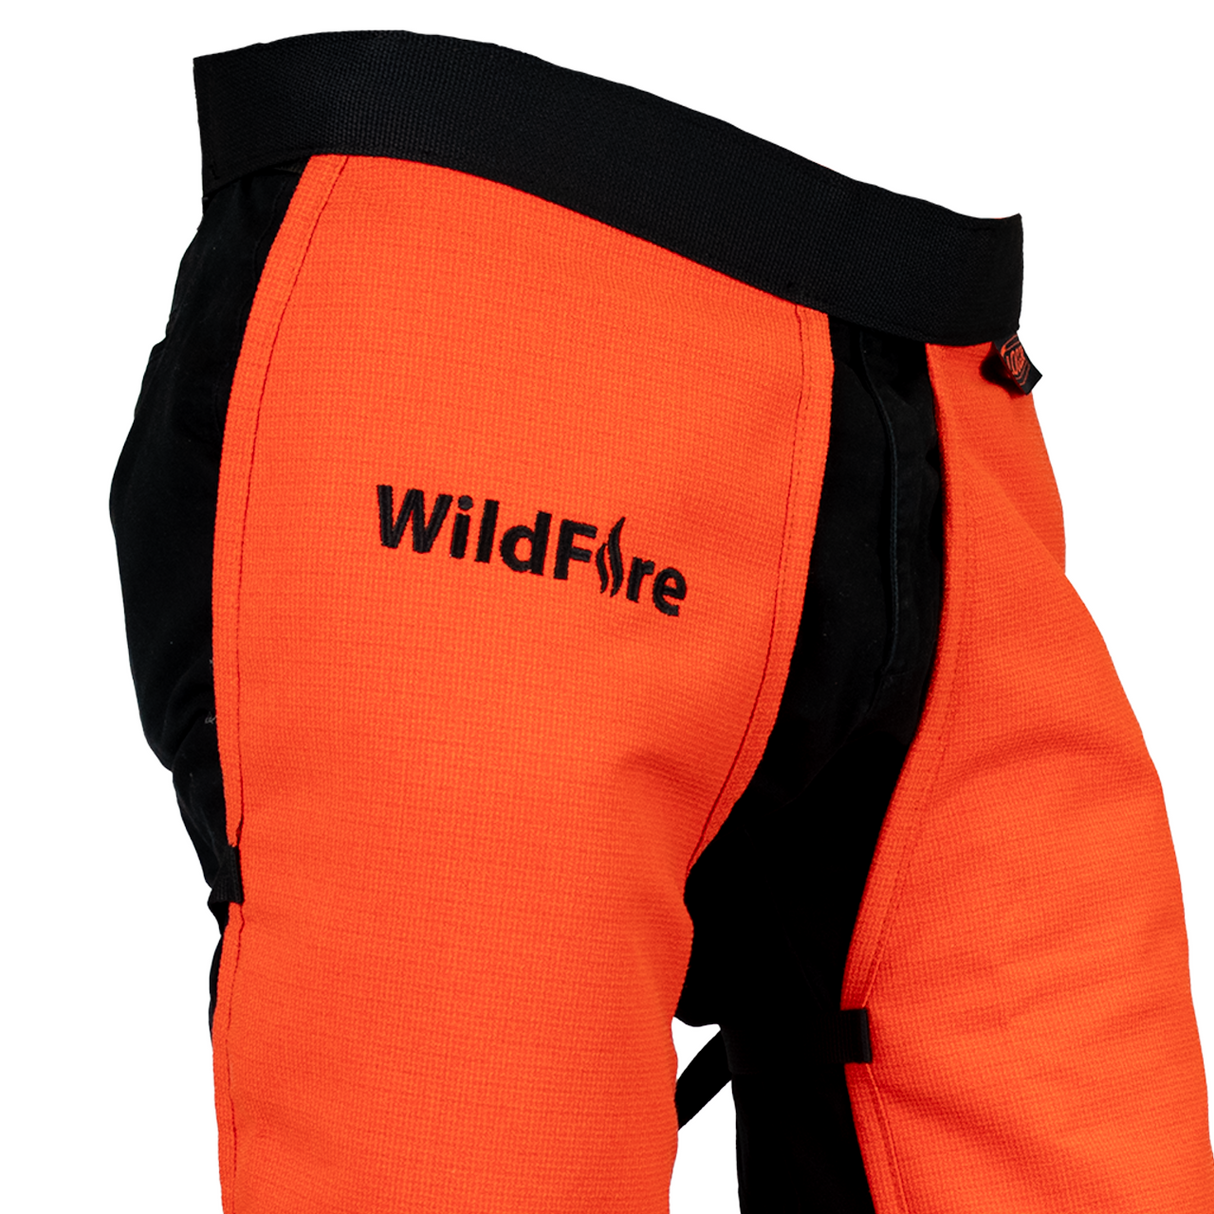 USFS Wildfire Chaps (Orange), Clogger